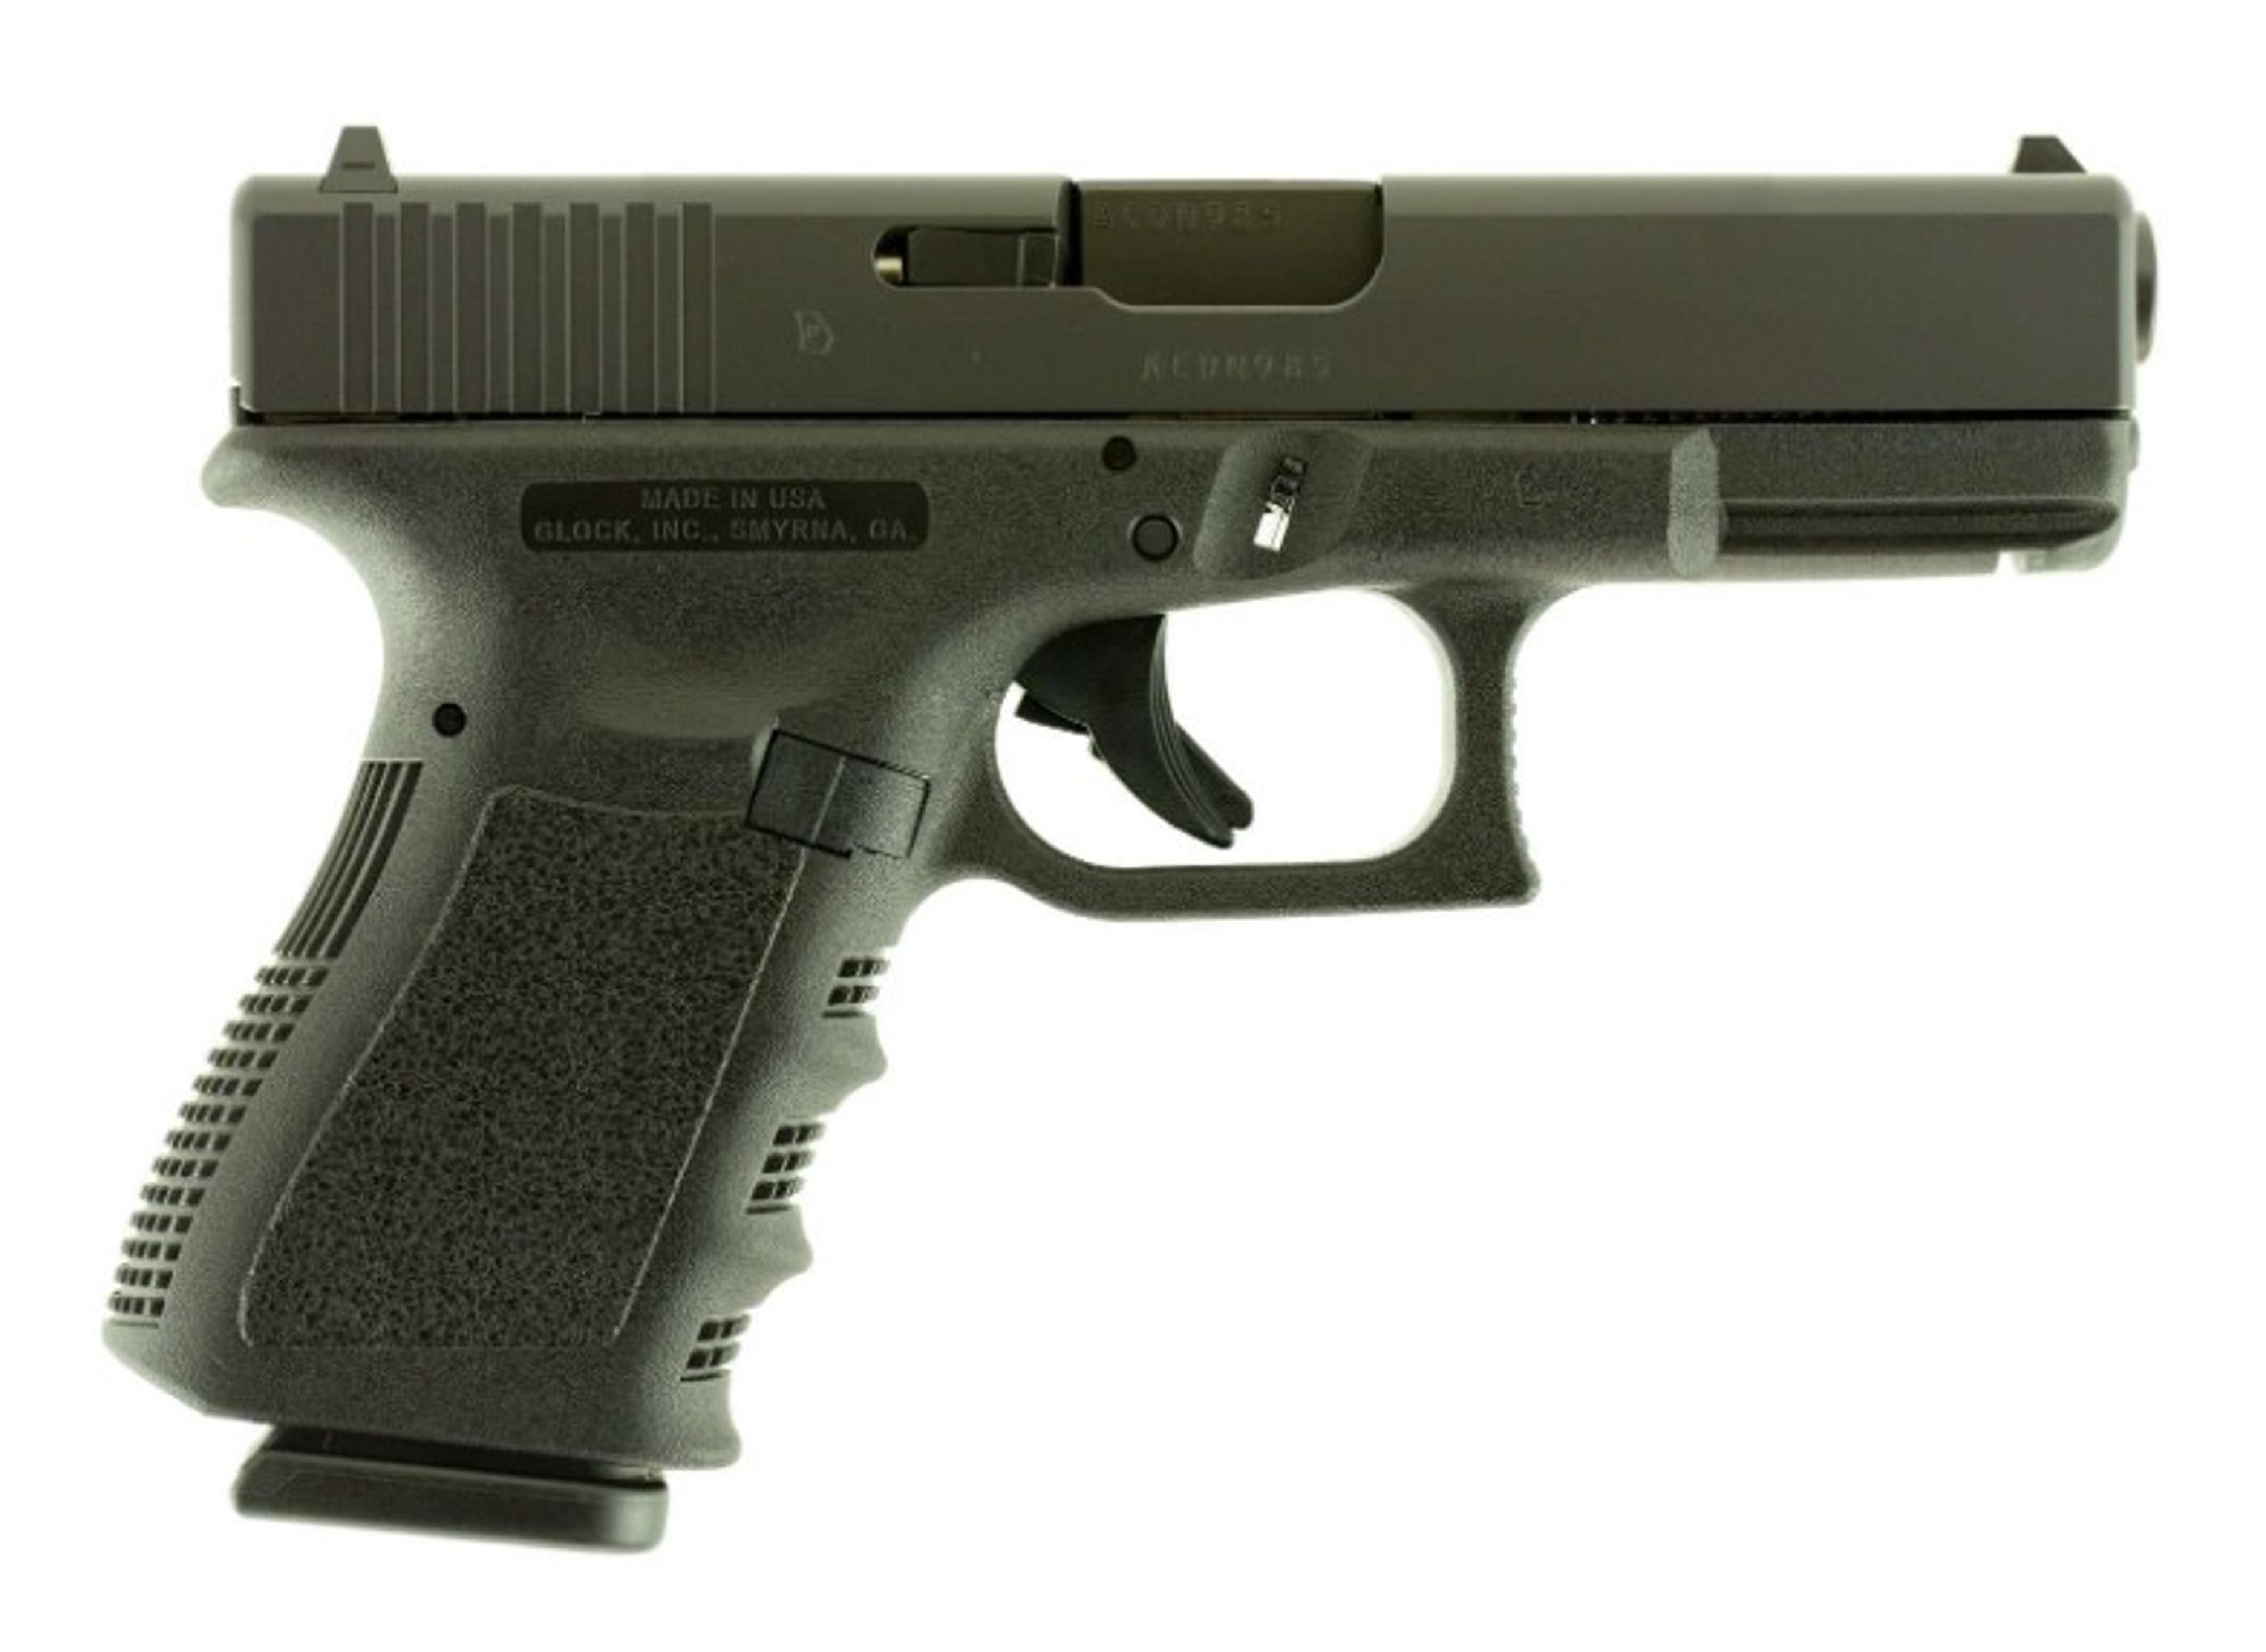  Glock G19 9mm Fxd